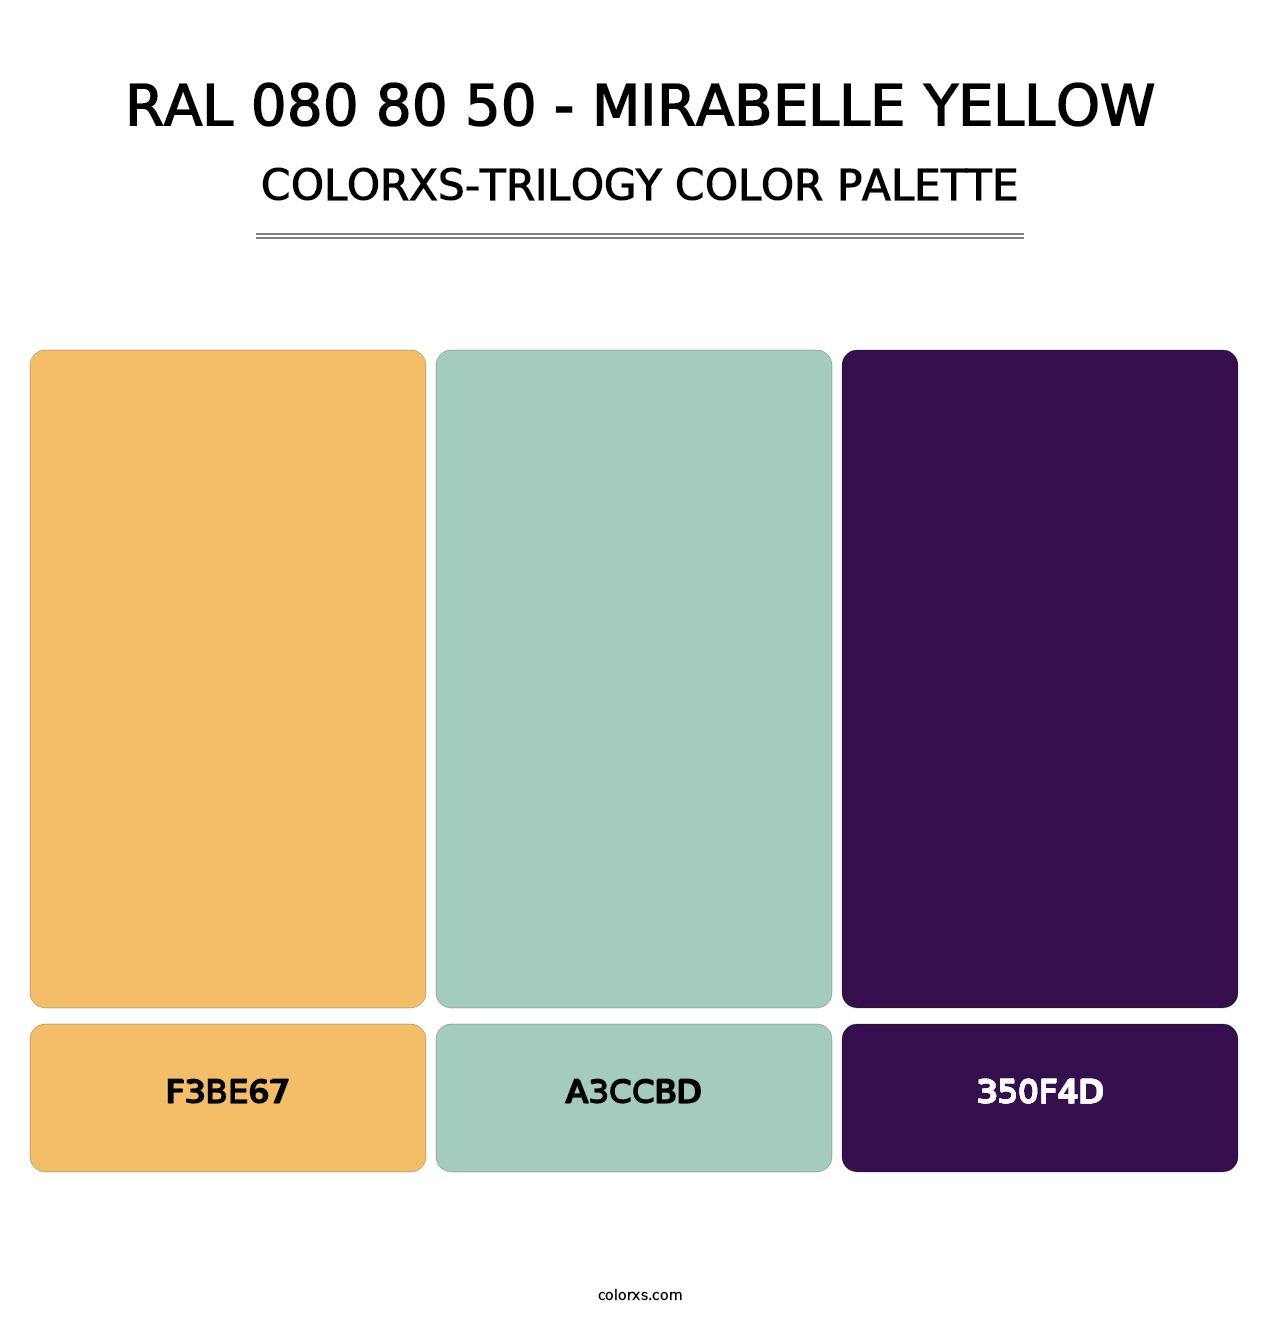 RAL 080 80 50 - Mirabelle Yellow - Colorxs Trilogy Palette